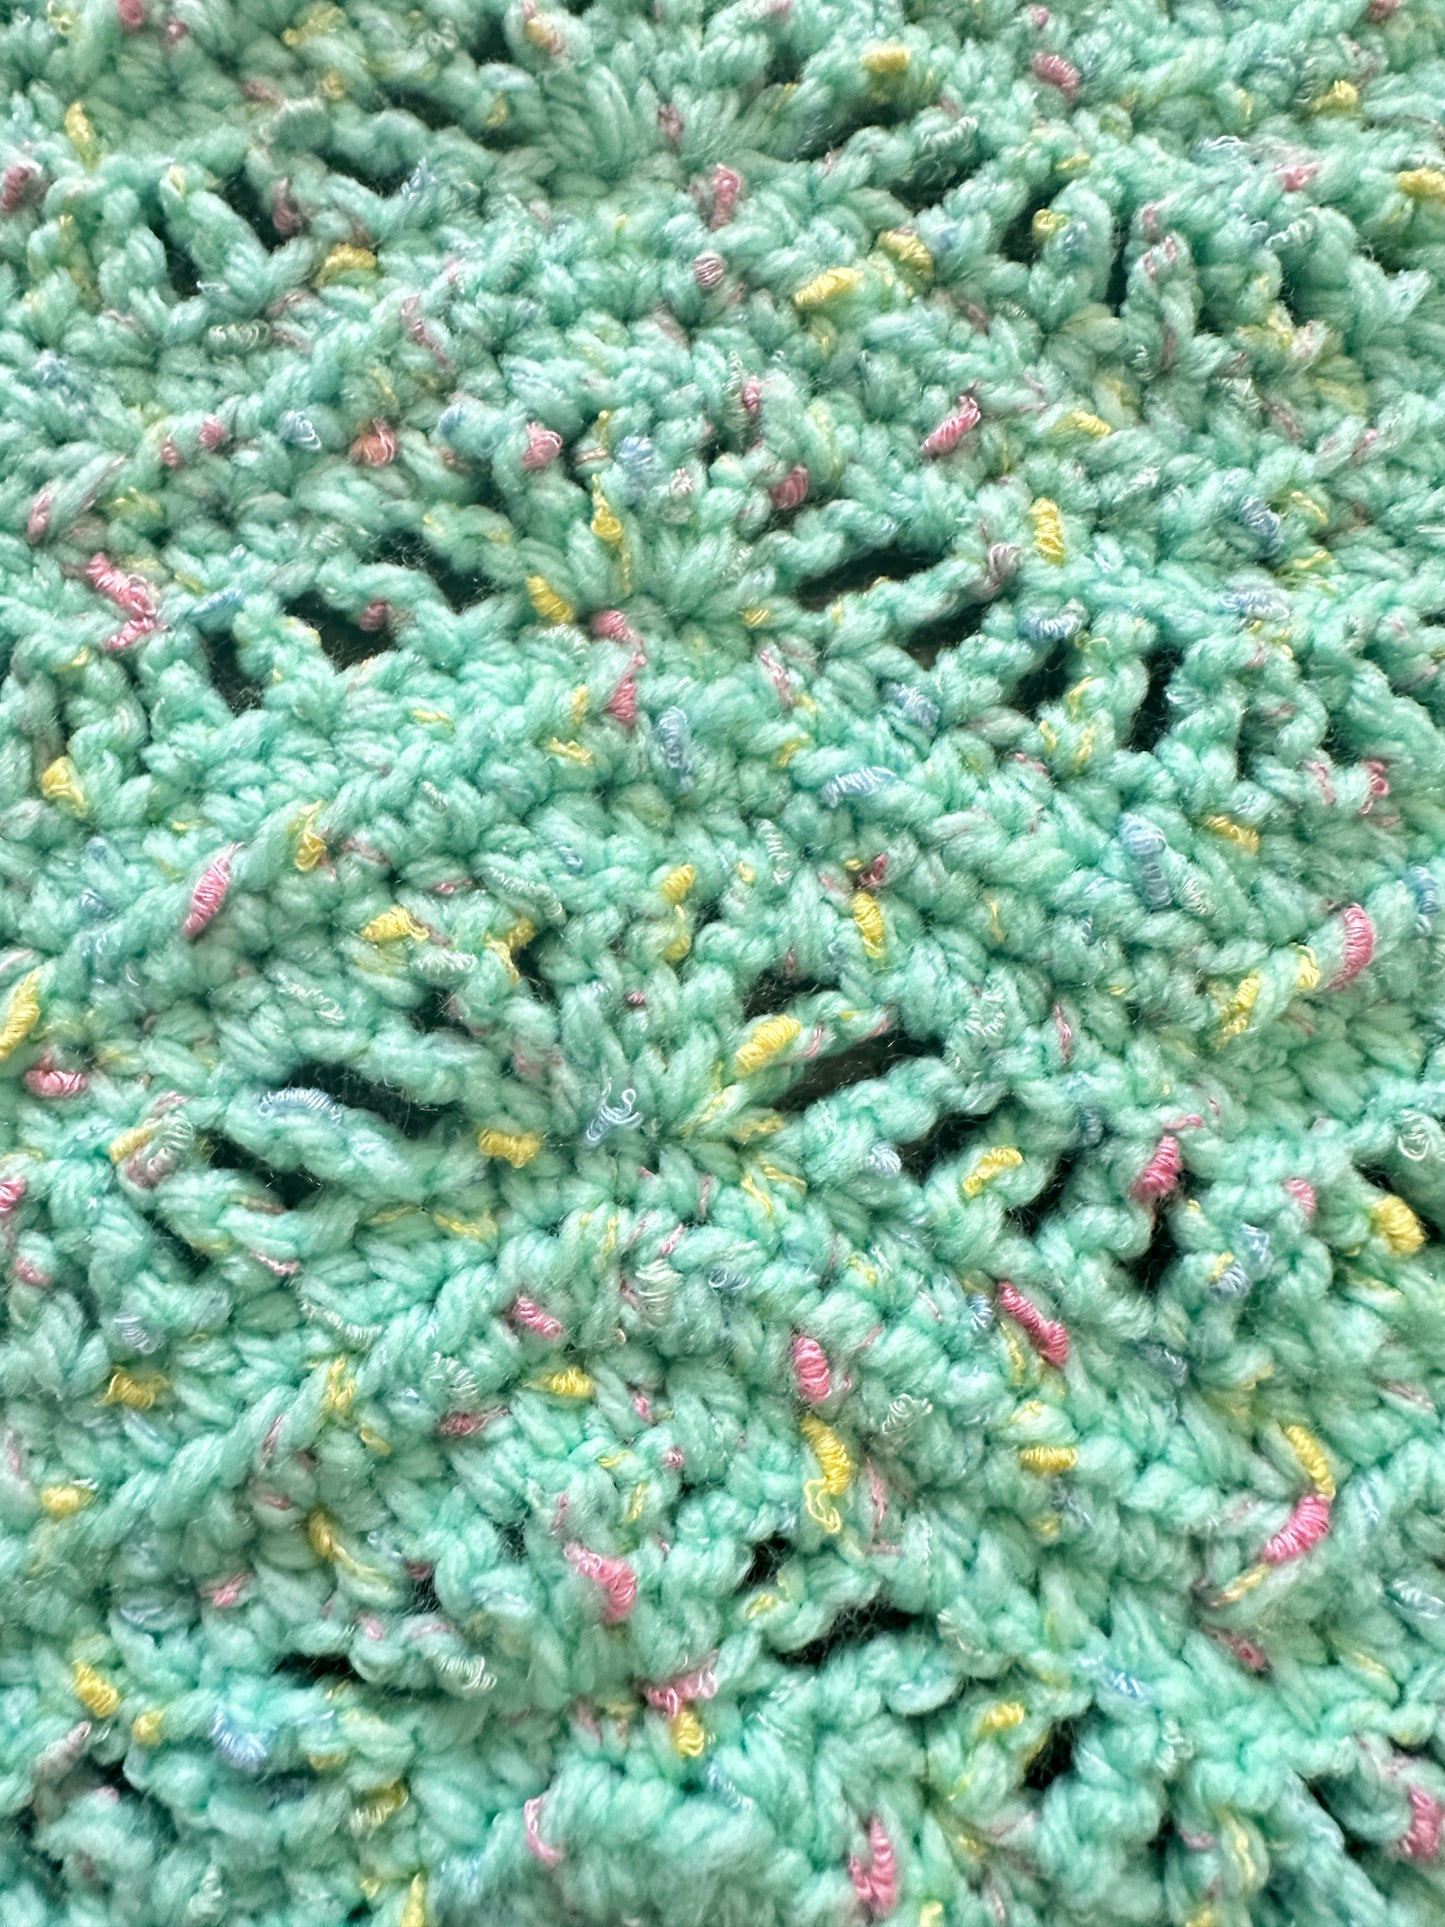 Mint Confetti Hand-Crocheted Baby Afghan & Hat - 29" x 32" by Nancy Stratman